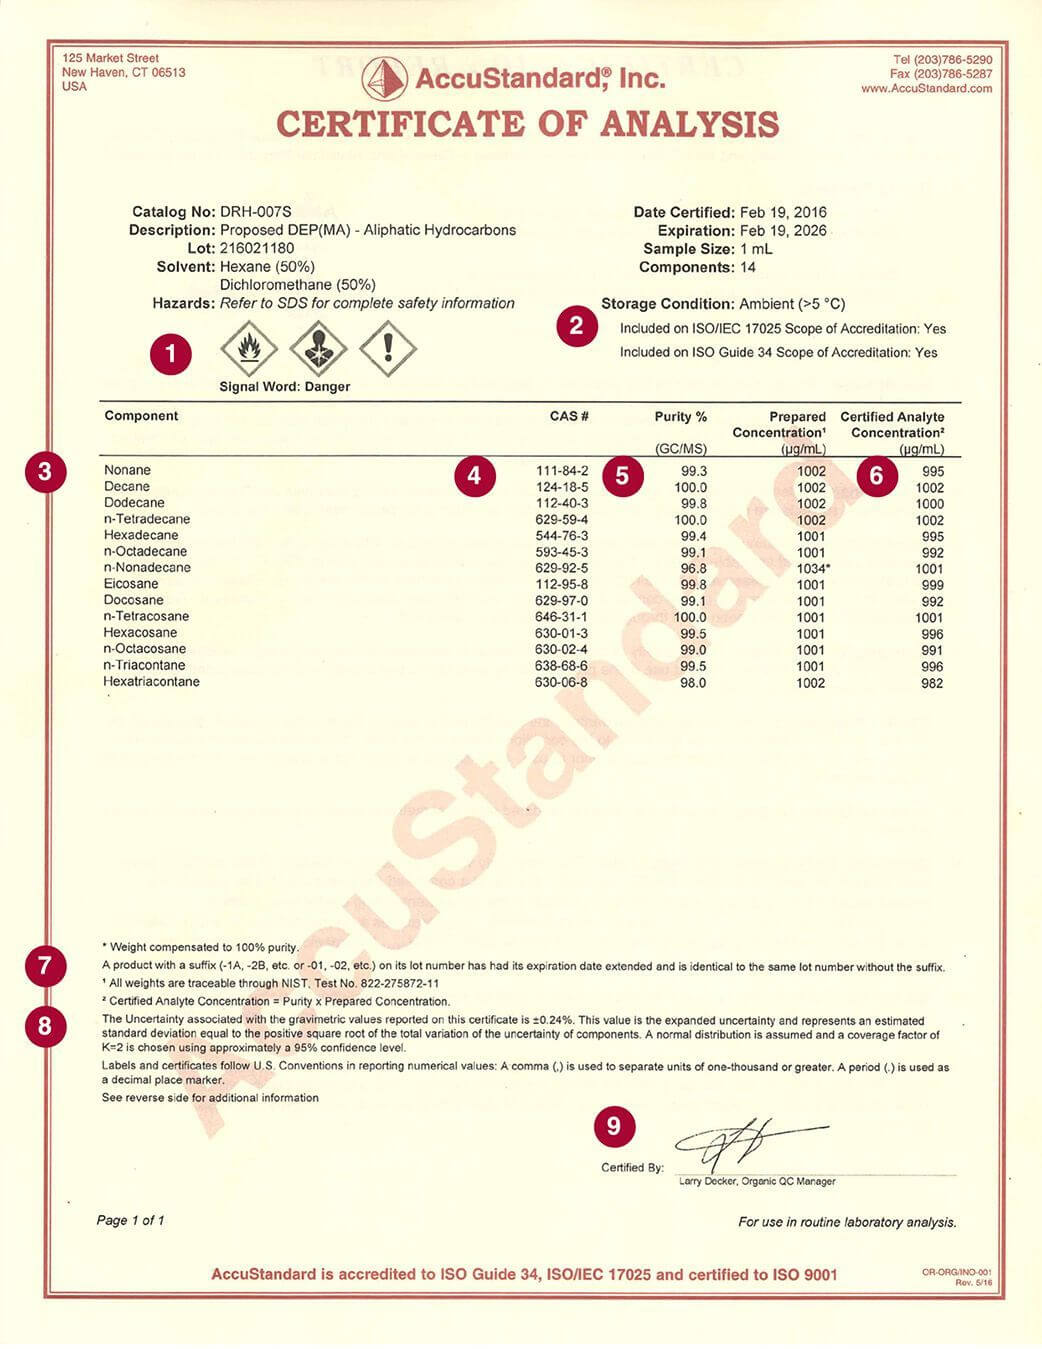 Certificate Of Analysis - Accustandard Throughout Certificate Of Analysis Template